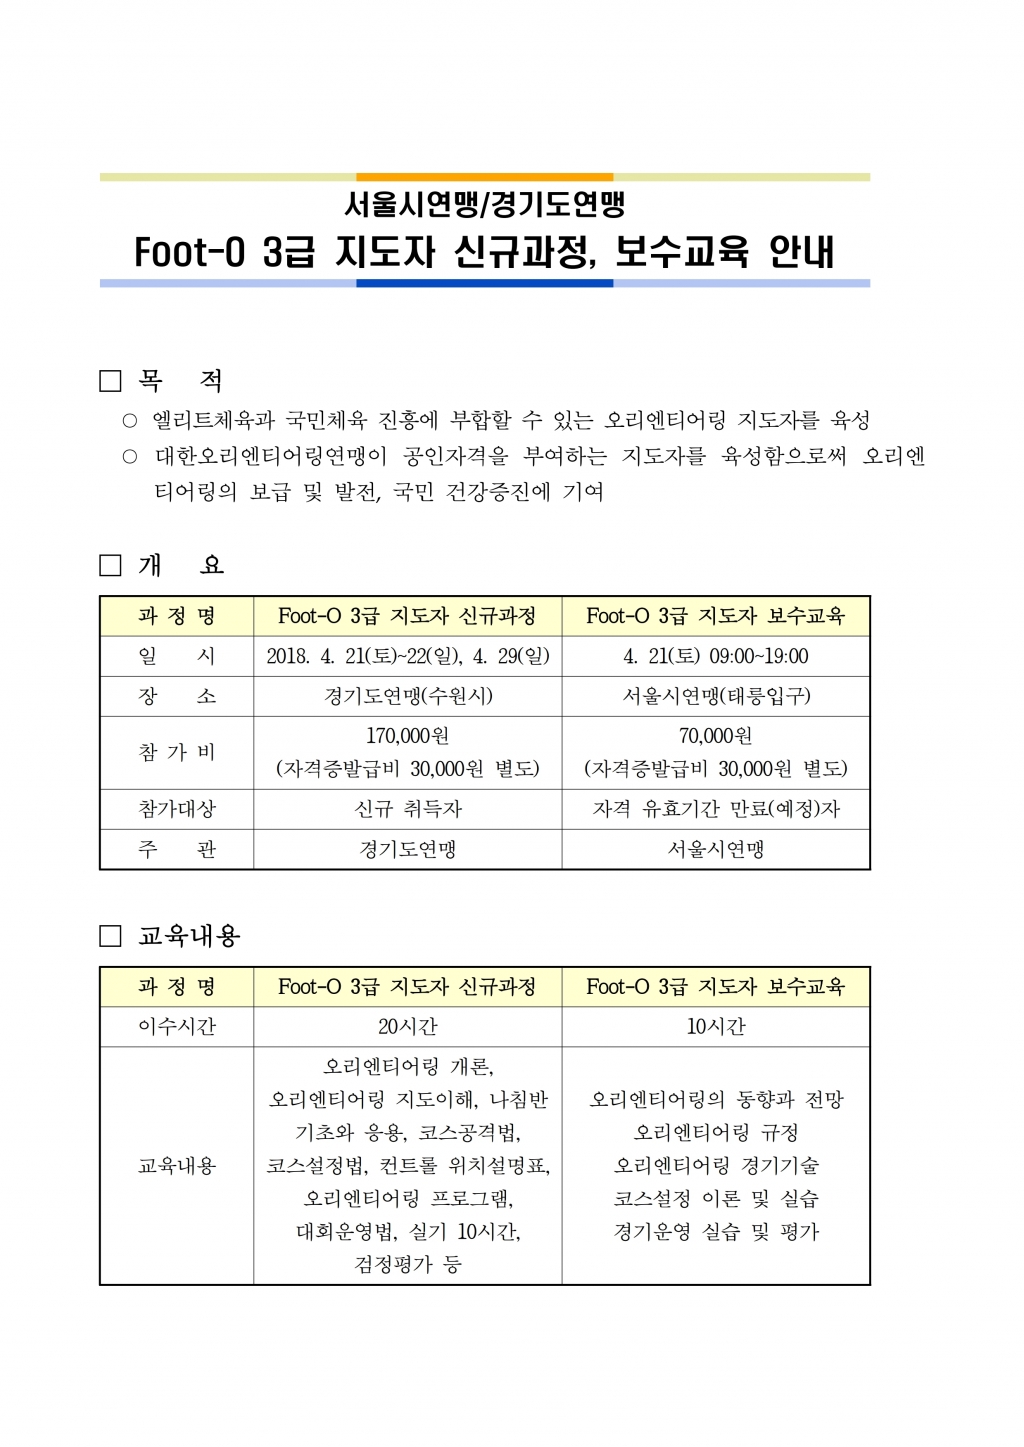 Foot-O 3급 지도자 신규 및 보수교육 안내.pdf_page_1.jpg